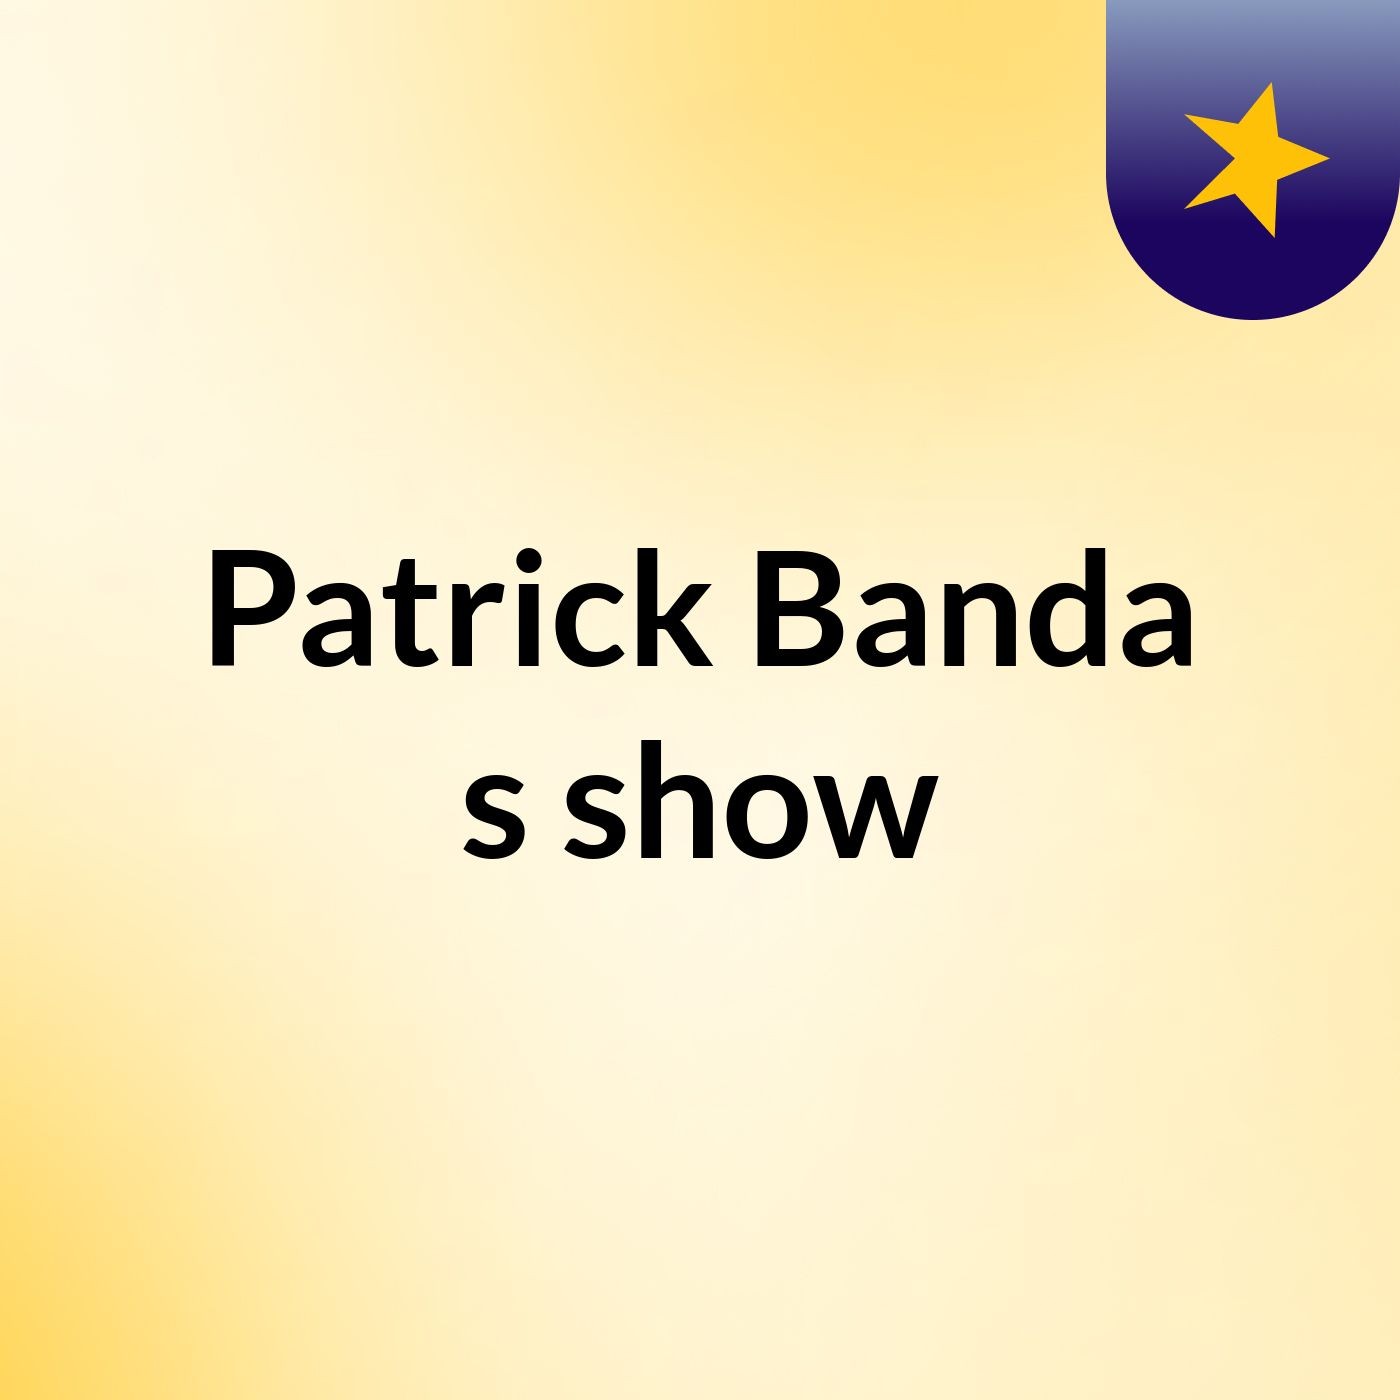 Patrick Banda's show